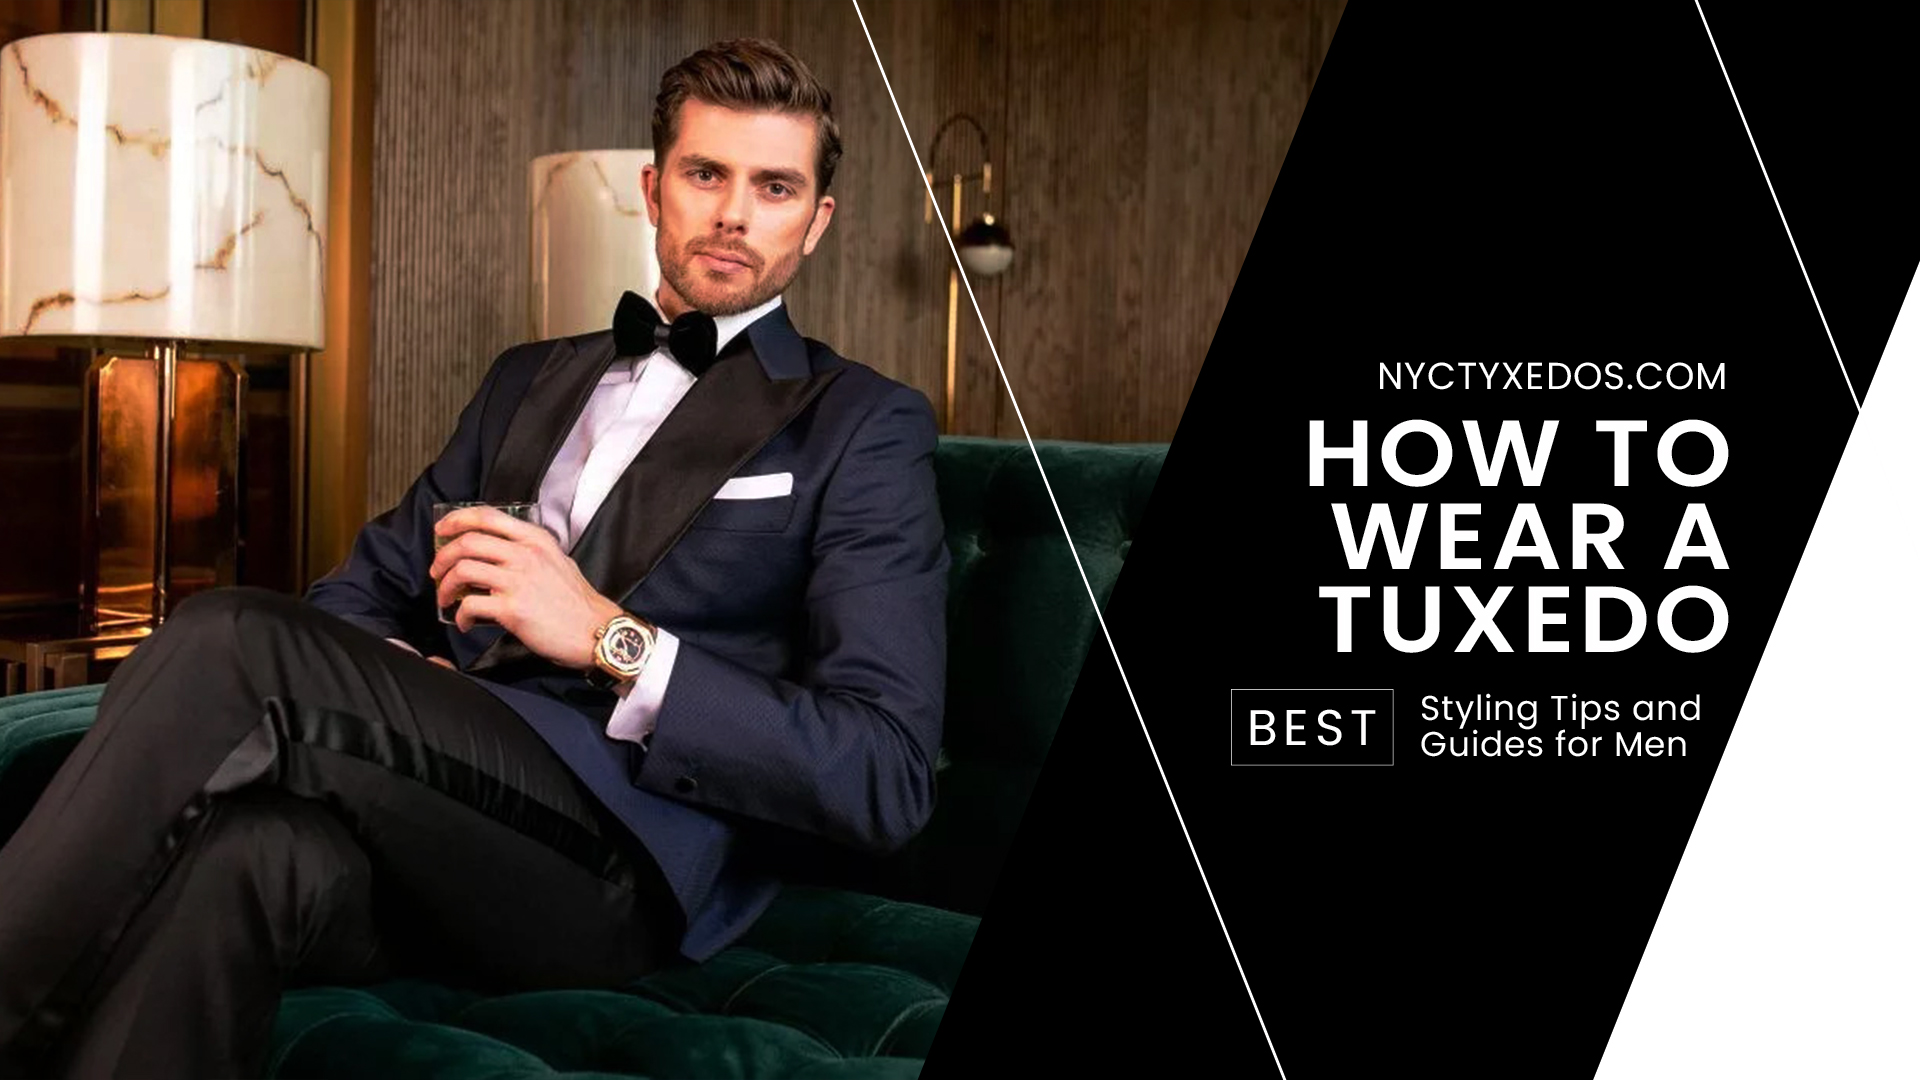 Wearing Suspenders & Tuxedo: 6 Step Checklist - NYC Tuxedos